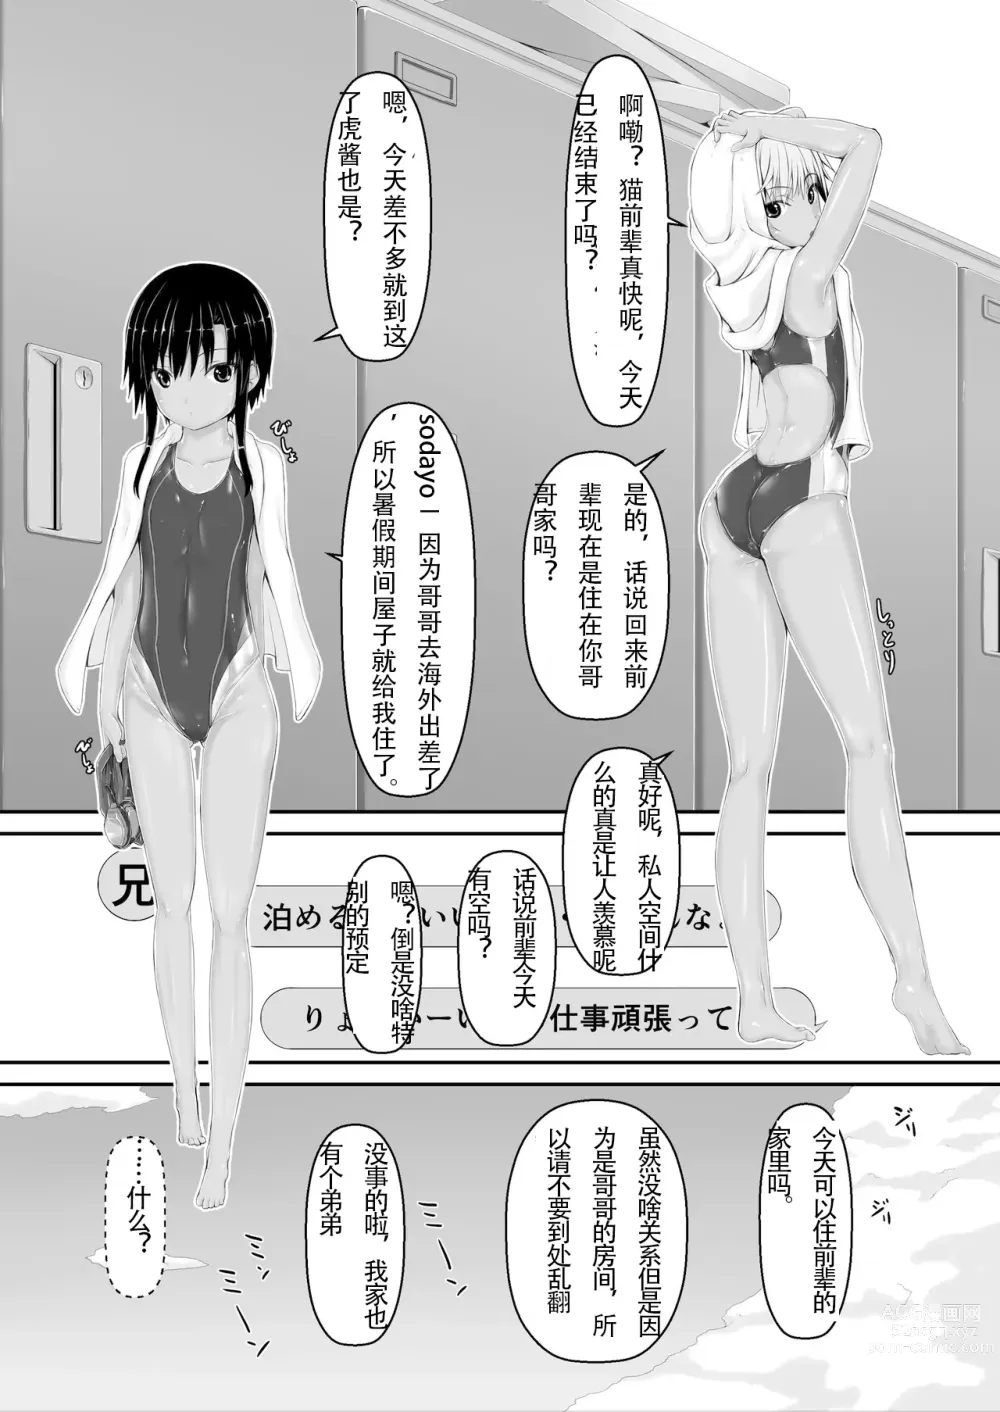 Page 2 of doujinshi Tora x Neko Choco Ice